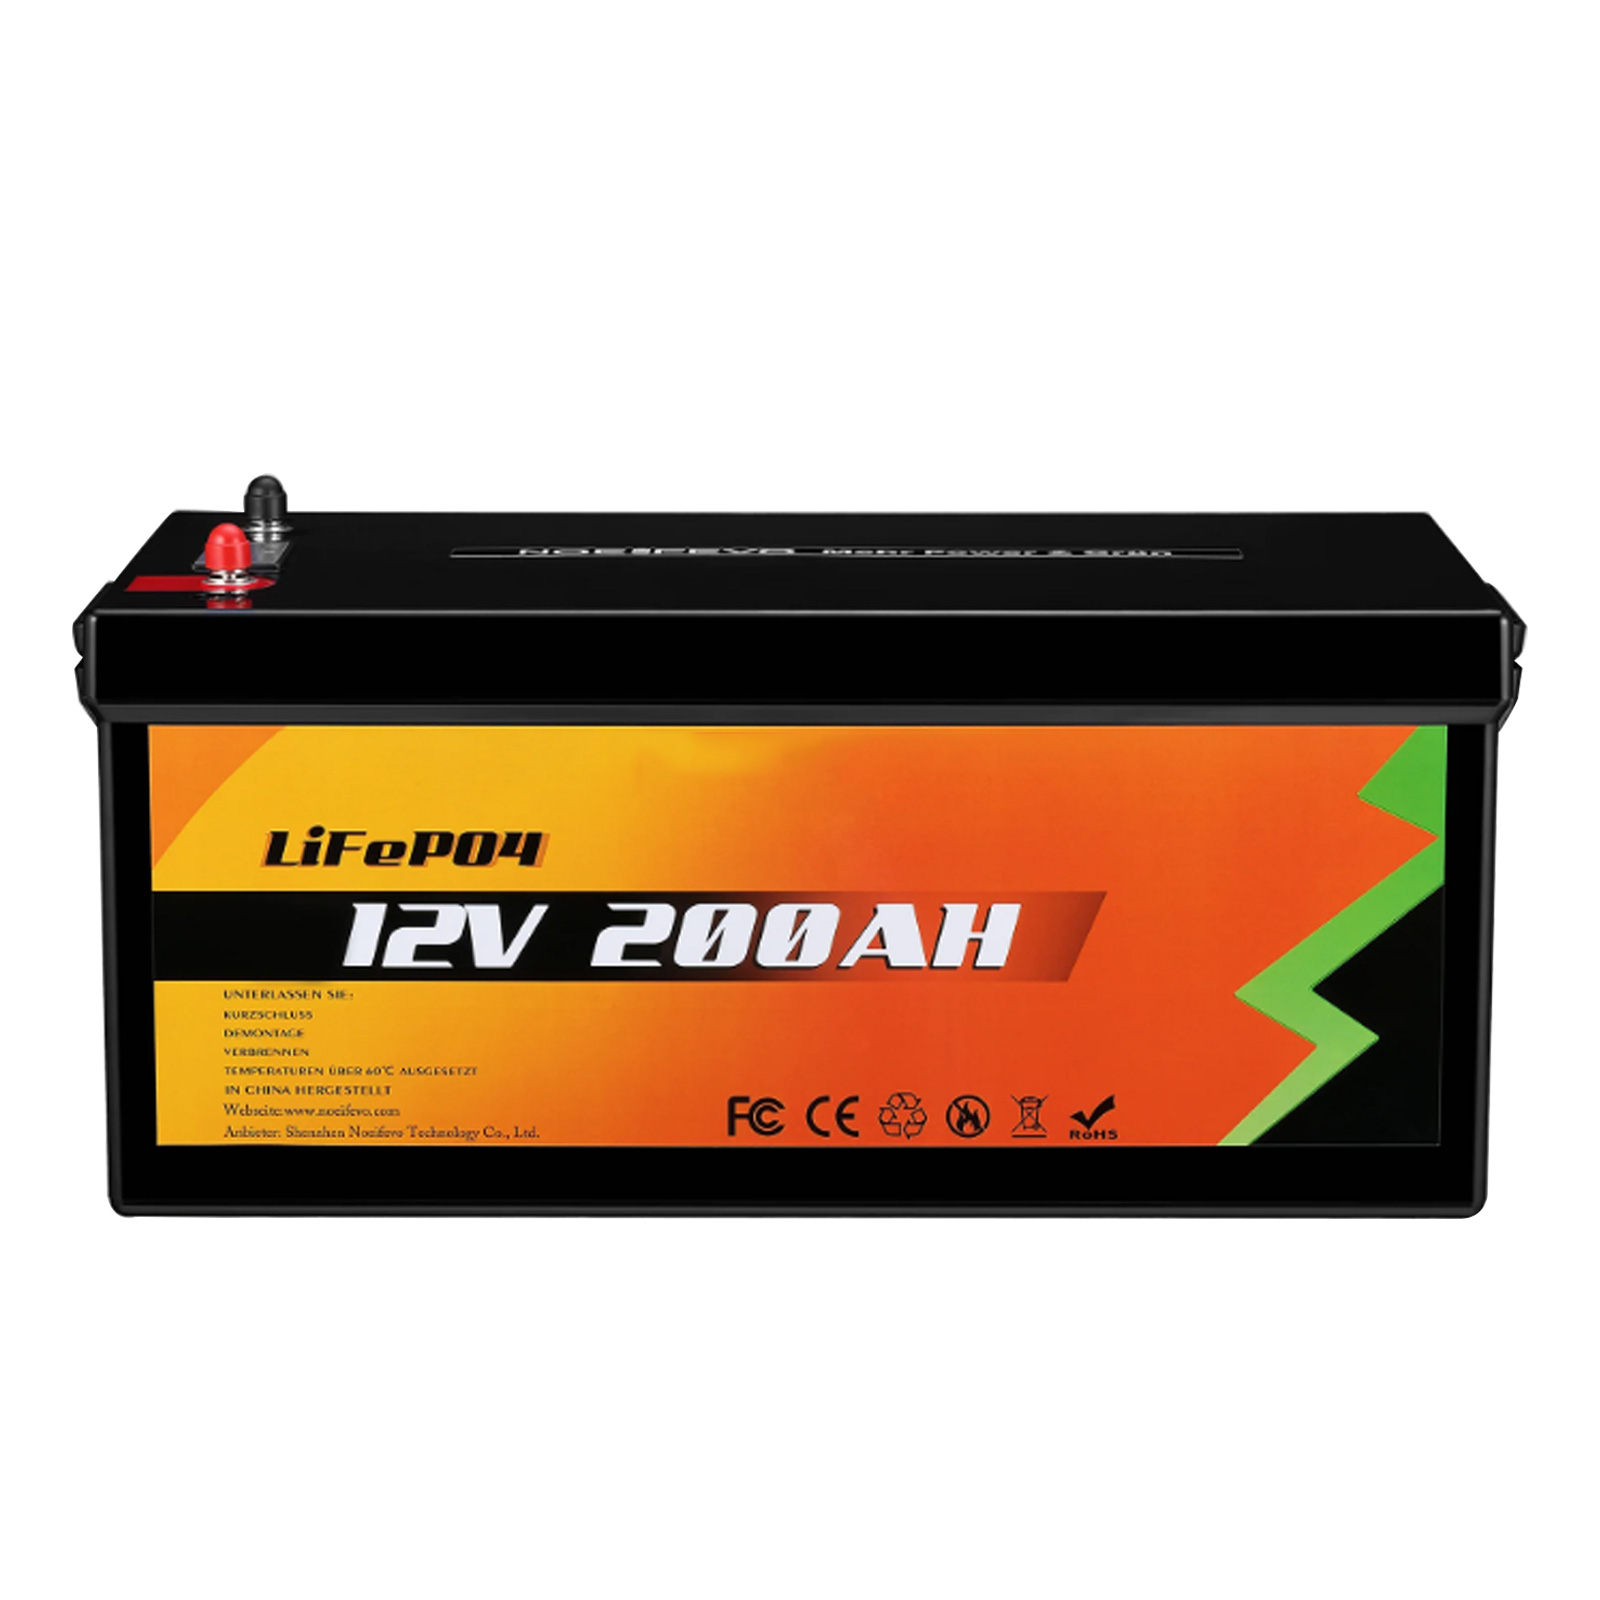 Lithium LiFePO4 -Caravan / Wohnmobil- Batterie 12V / 20Ah